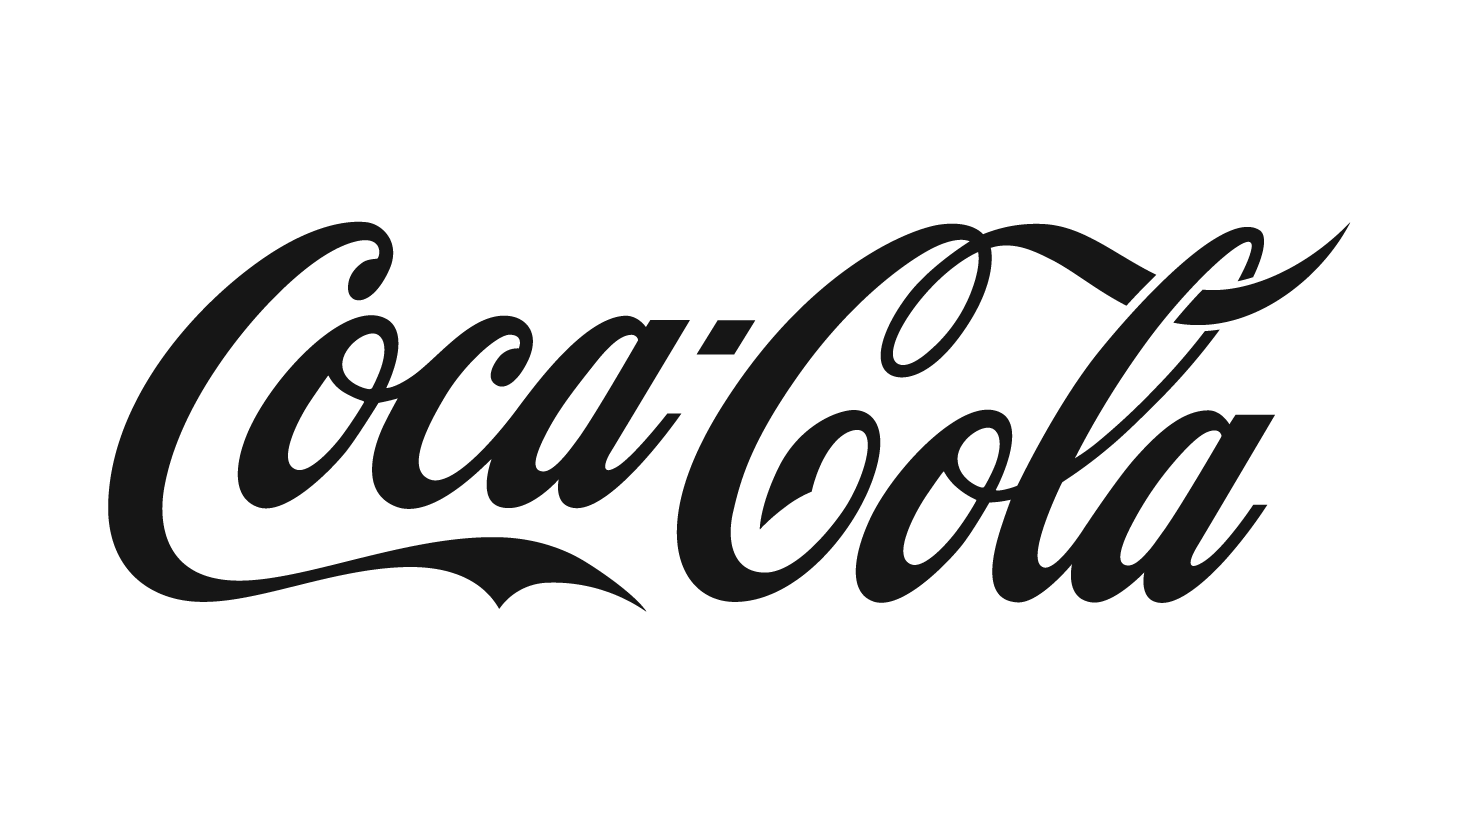 Website Logos_Coca Cola.png